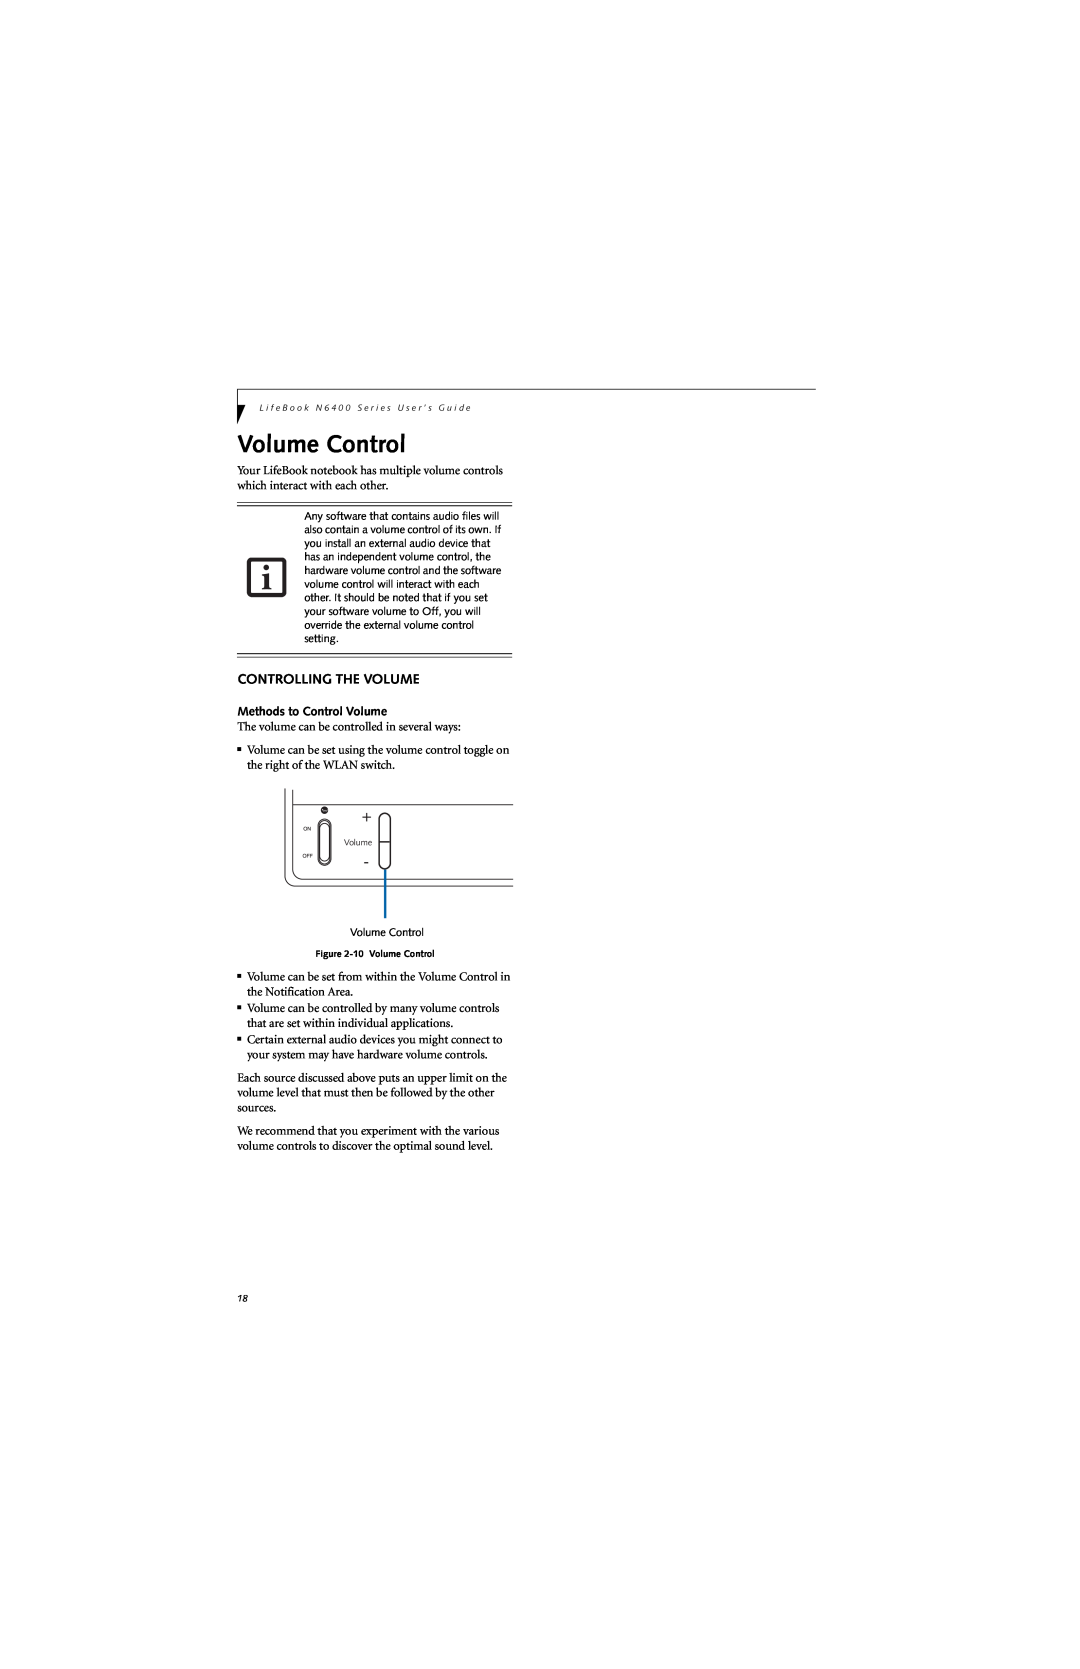 Fujitsu N6420 manual Volume Control, Controlling The Volume, Methods to Control Volume 